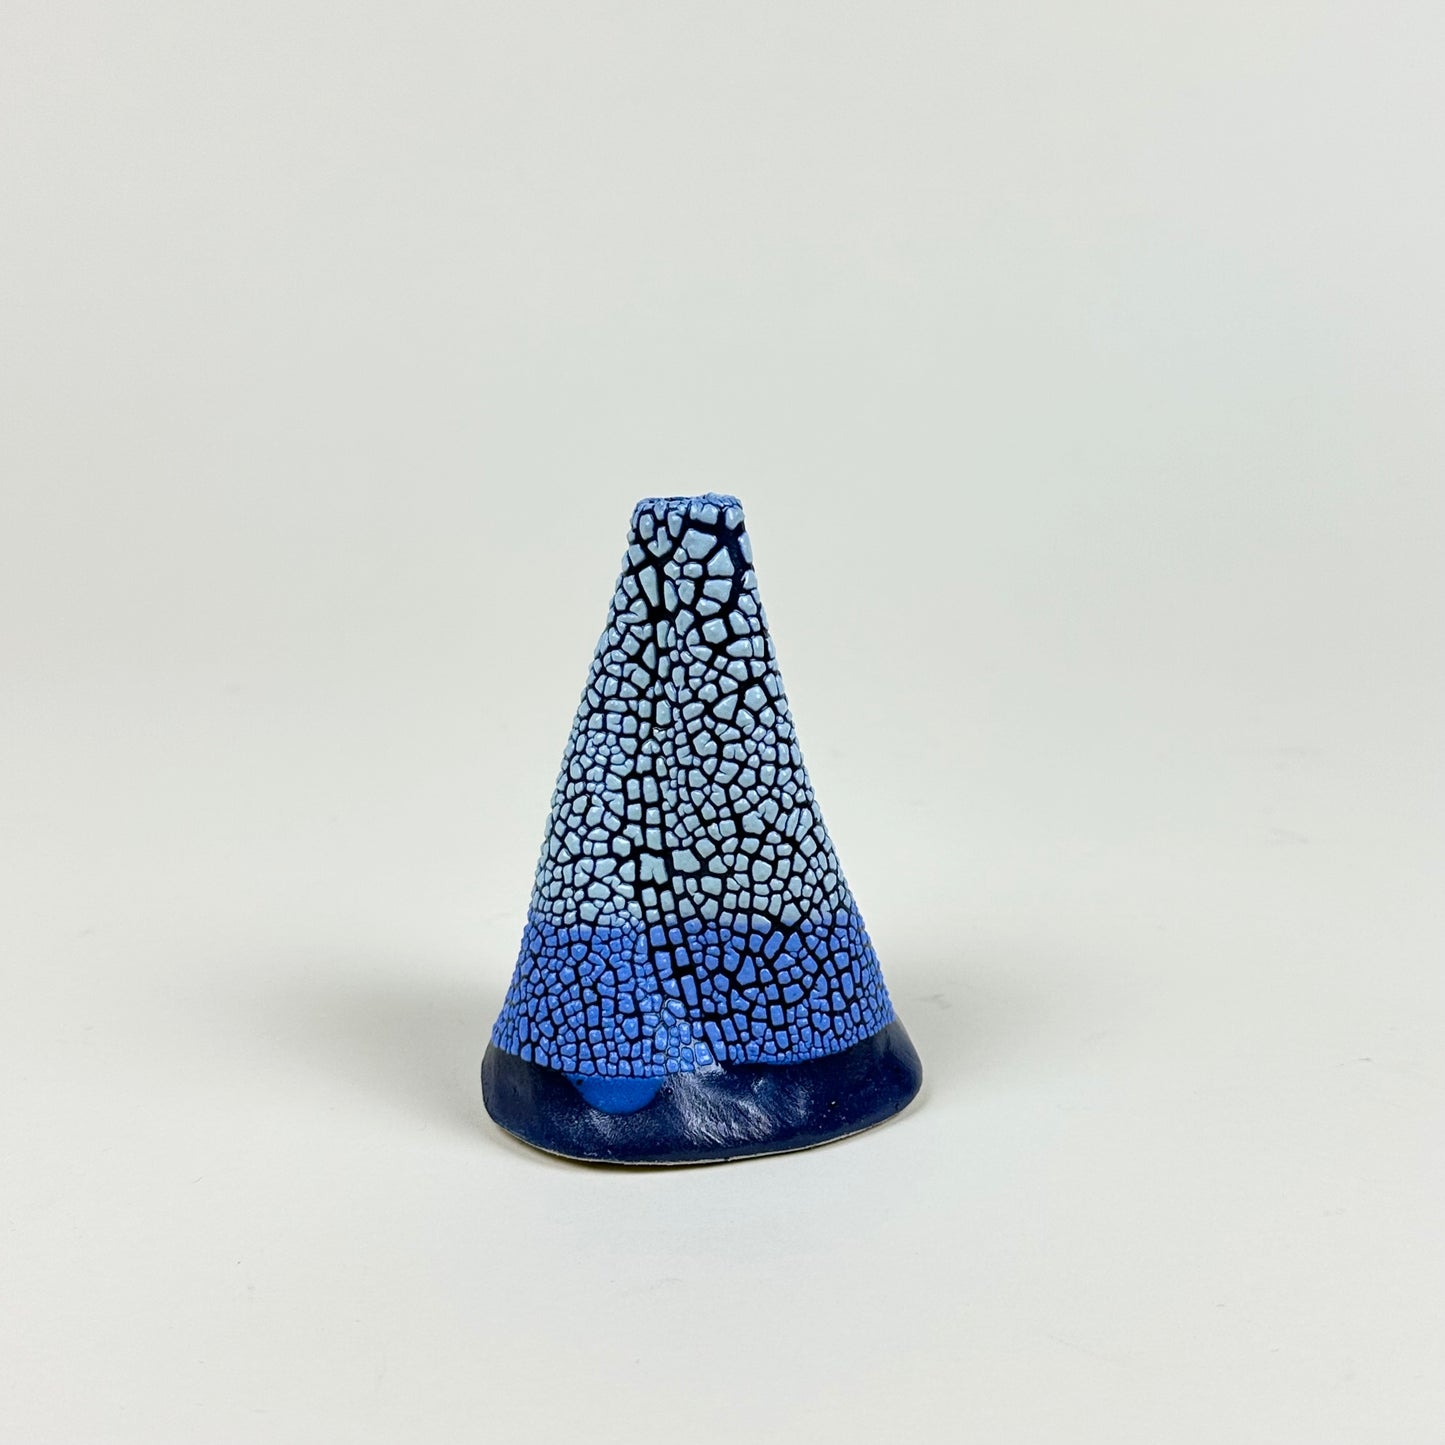 Three shades of blue volcano vase (S) by Astrid Öhman.